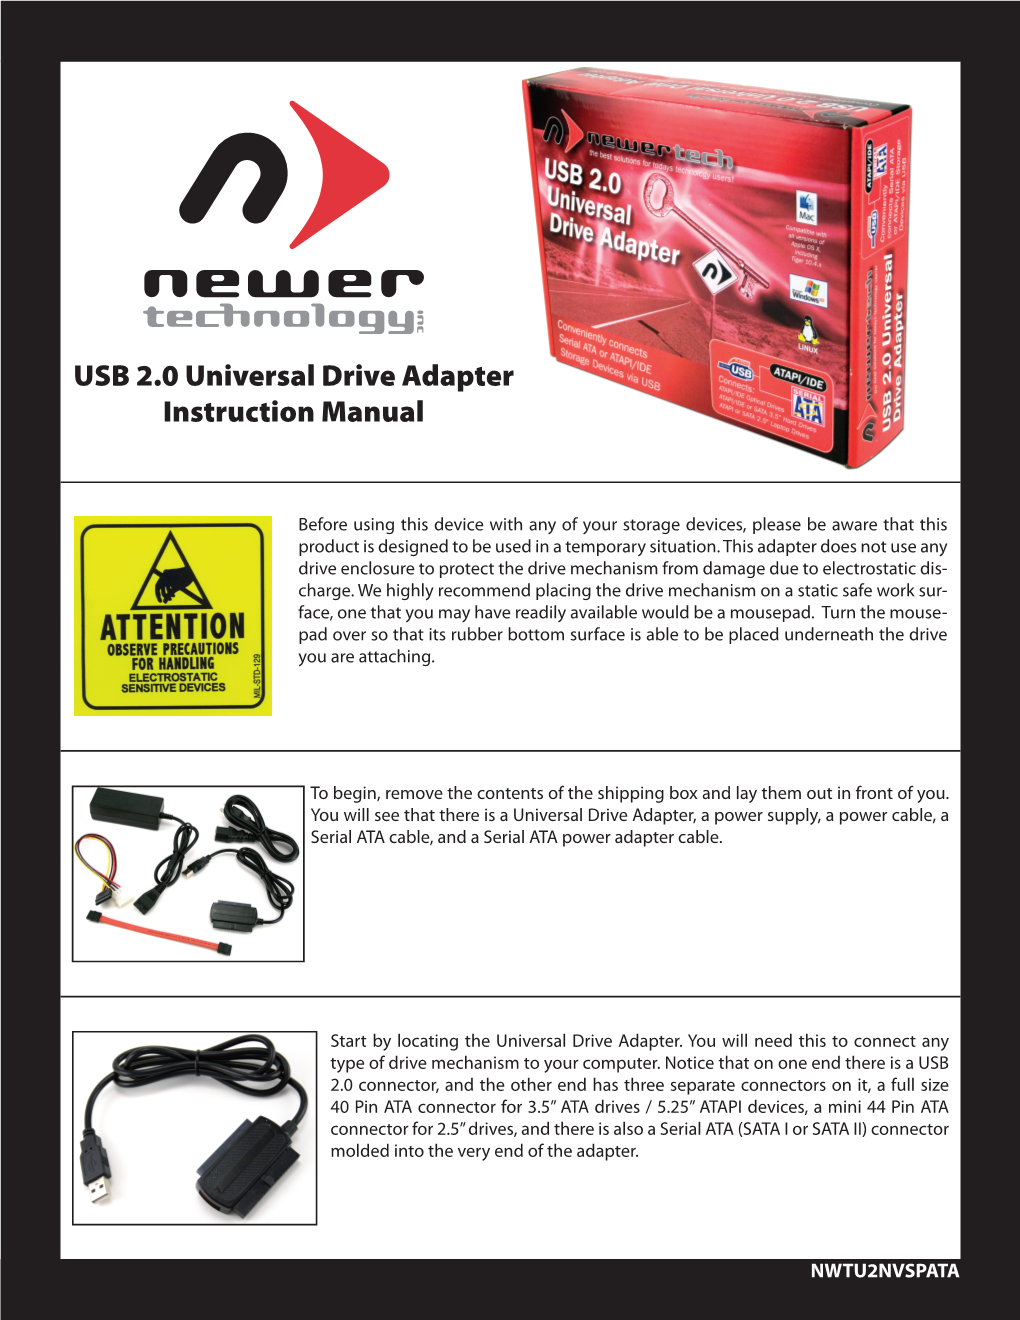 USB 2.0 Universal Drive Adapter Instruction Manual